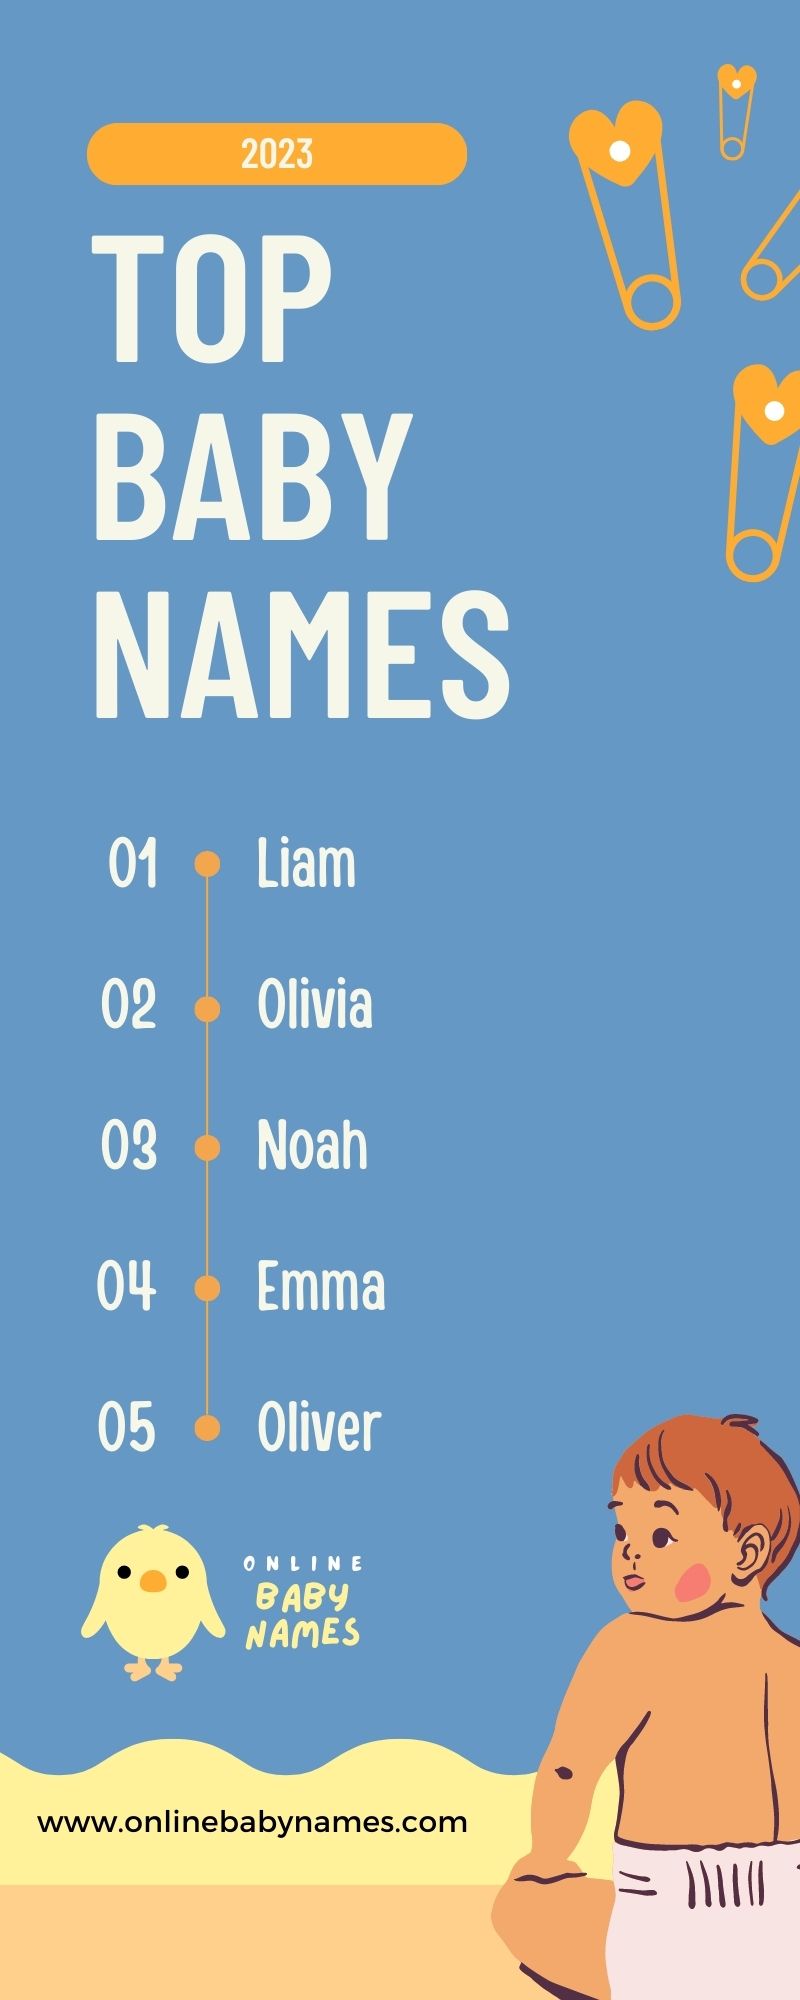 Top Baby Names in 2023